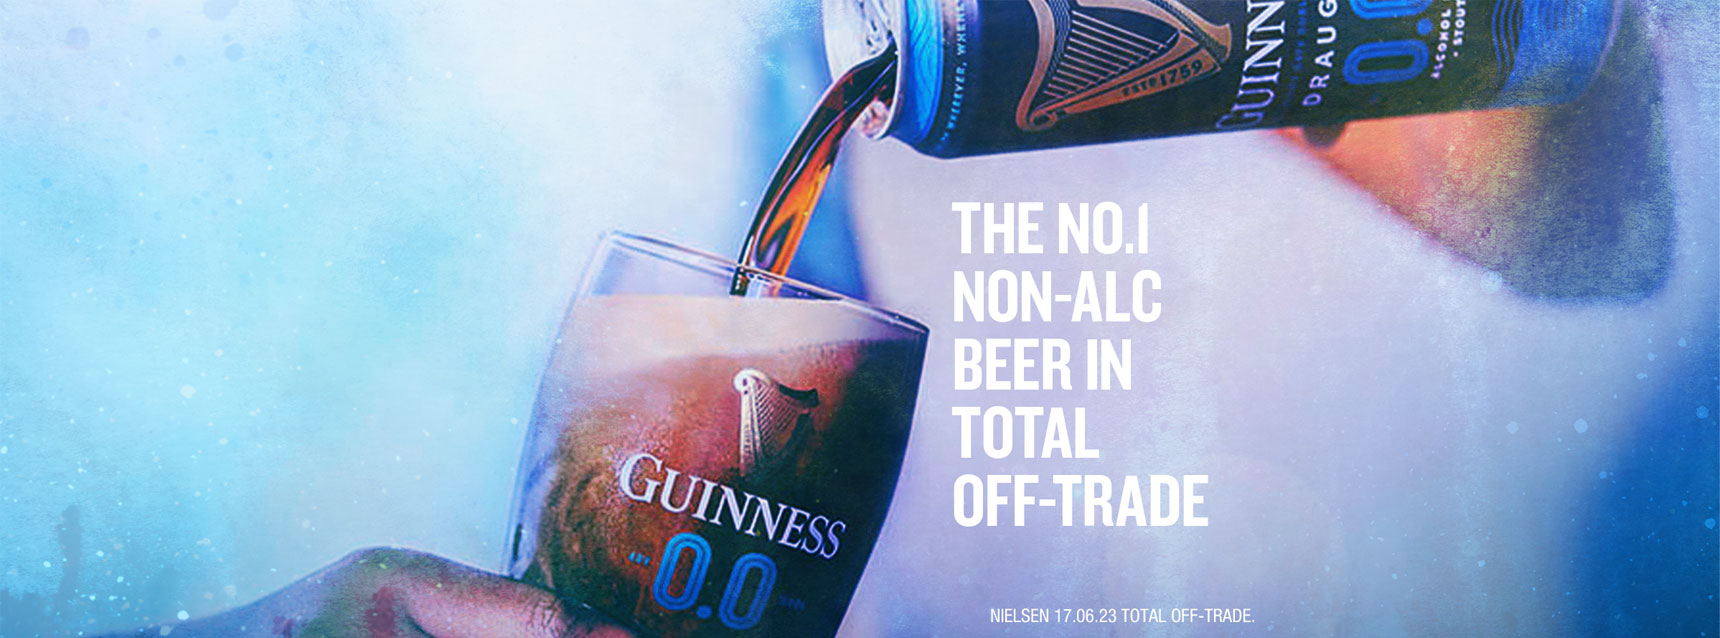 Guinness Zero - the No.1 non-alc beer in total off-trade